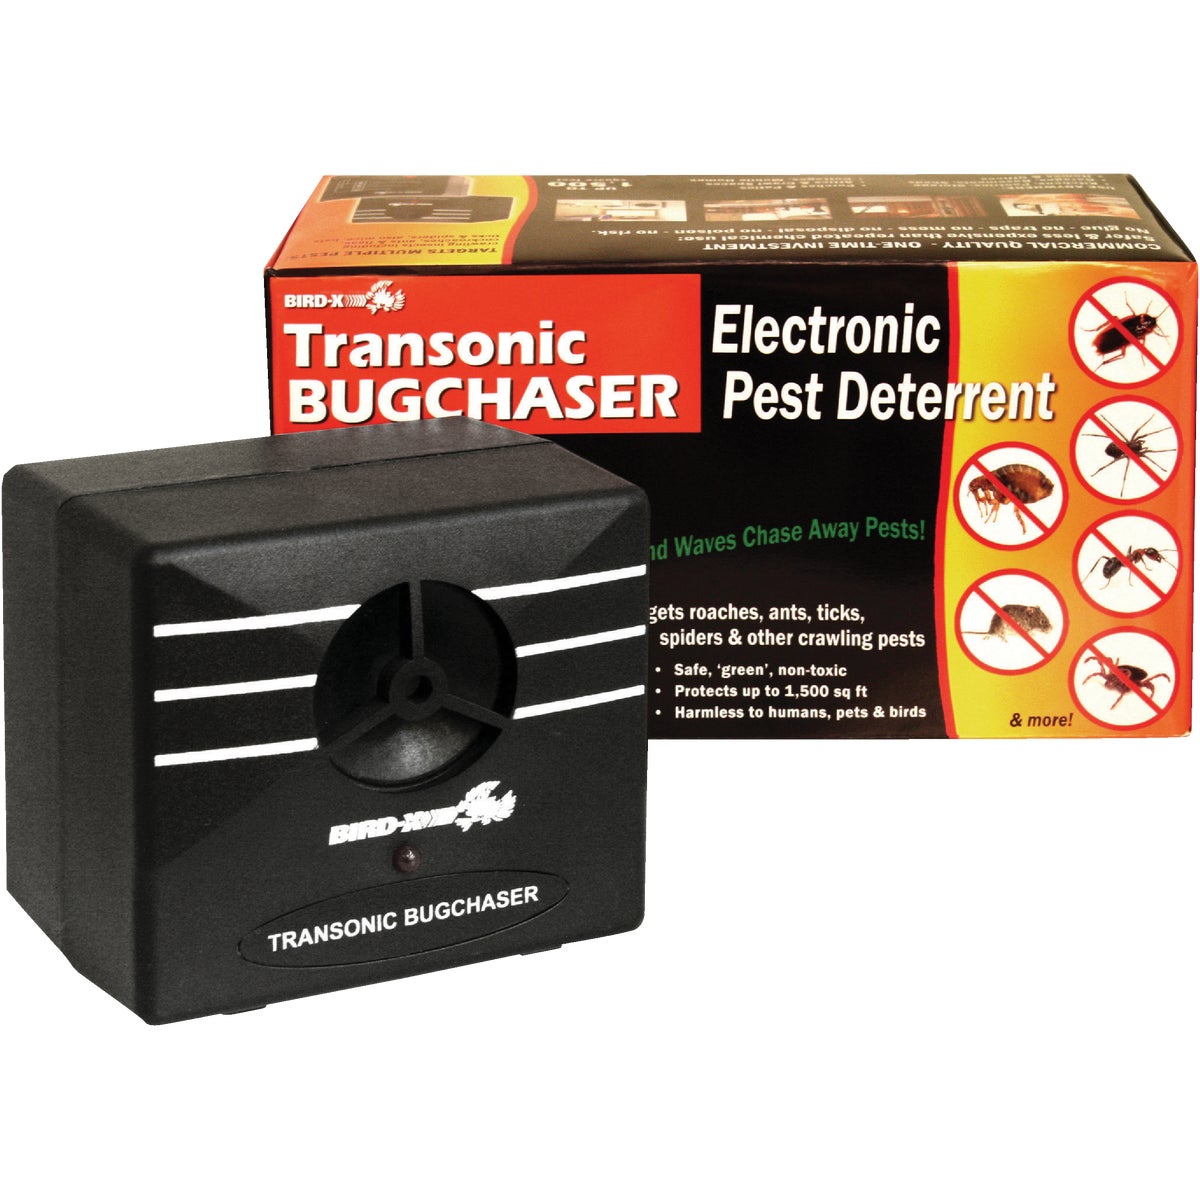 Item 703662, Transonic electronic pest repellent.